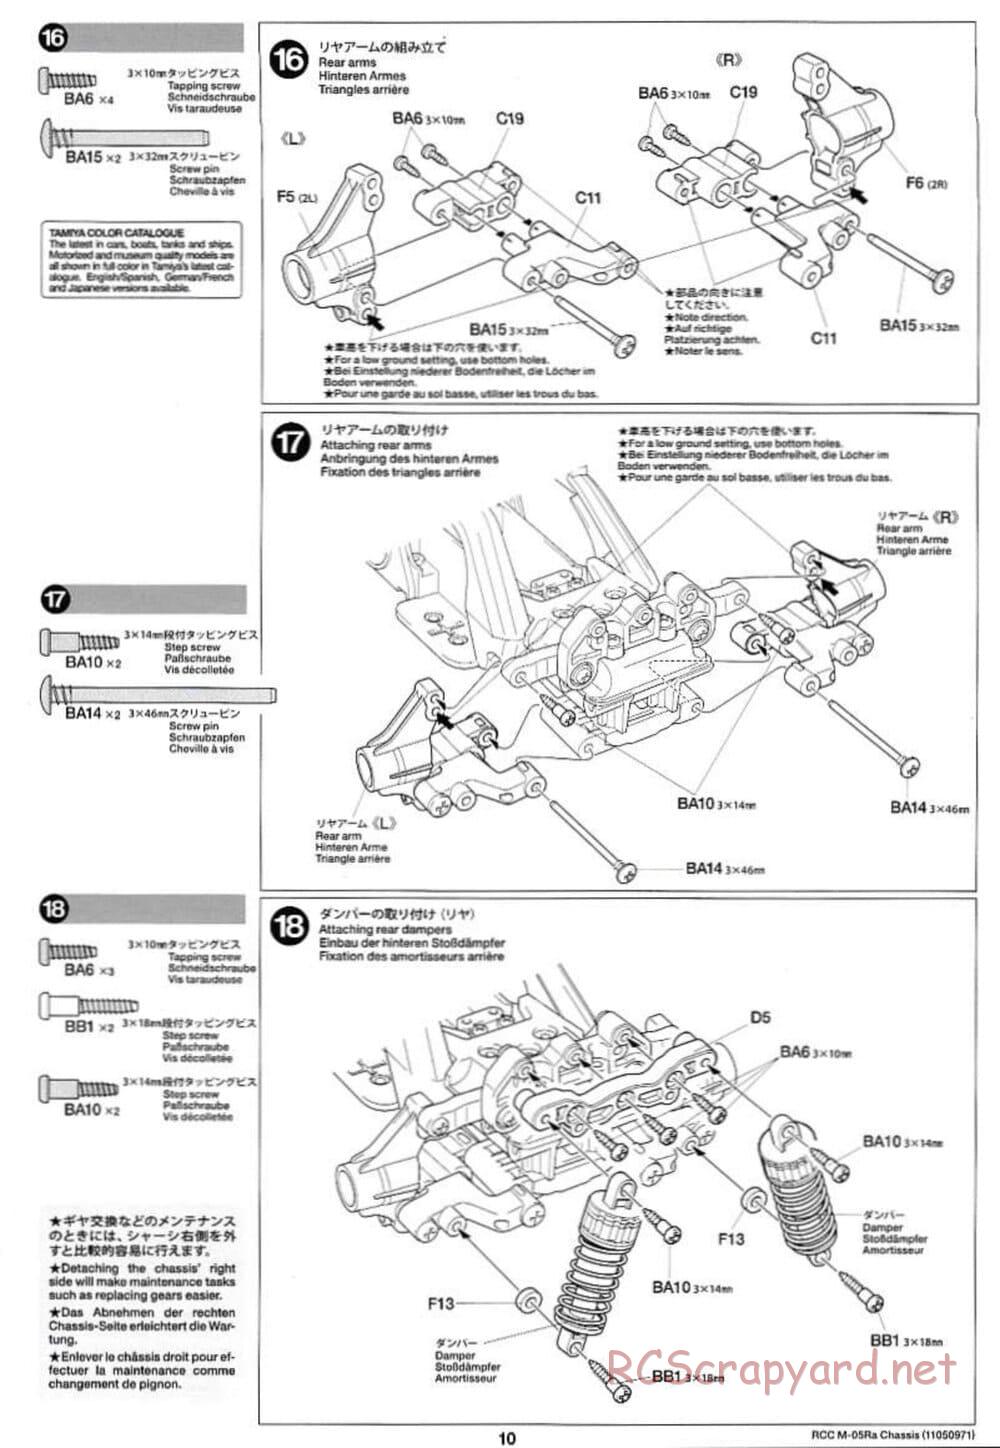 Tamiya - M-05Ra Chassis - Manual - Page 10